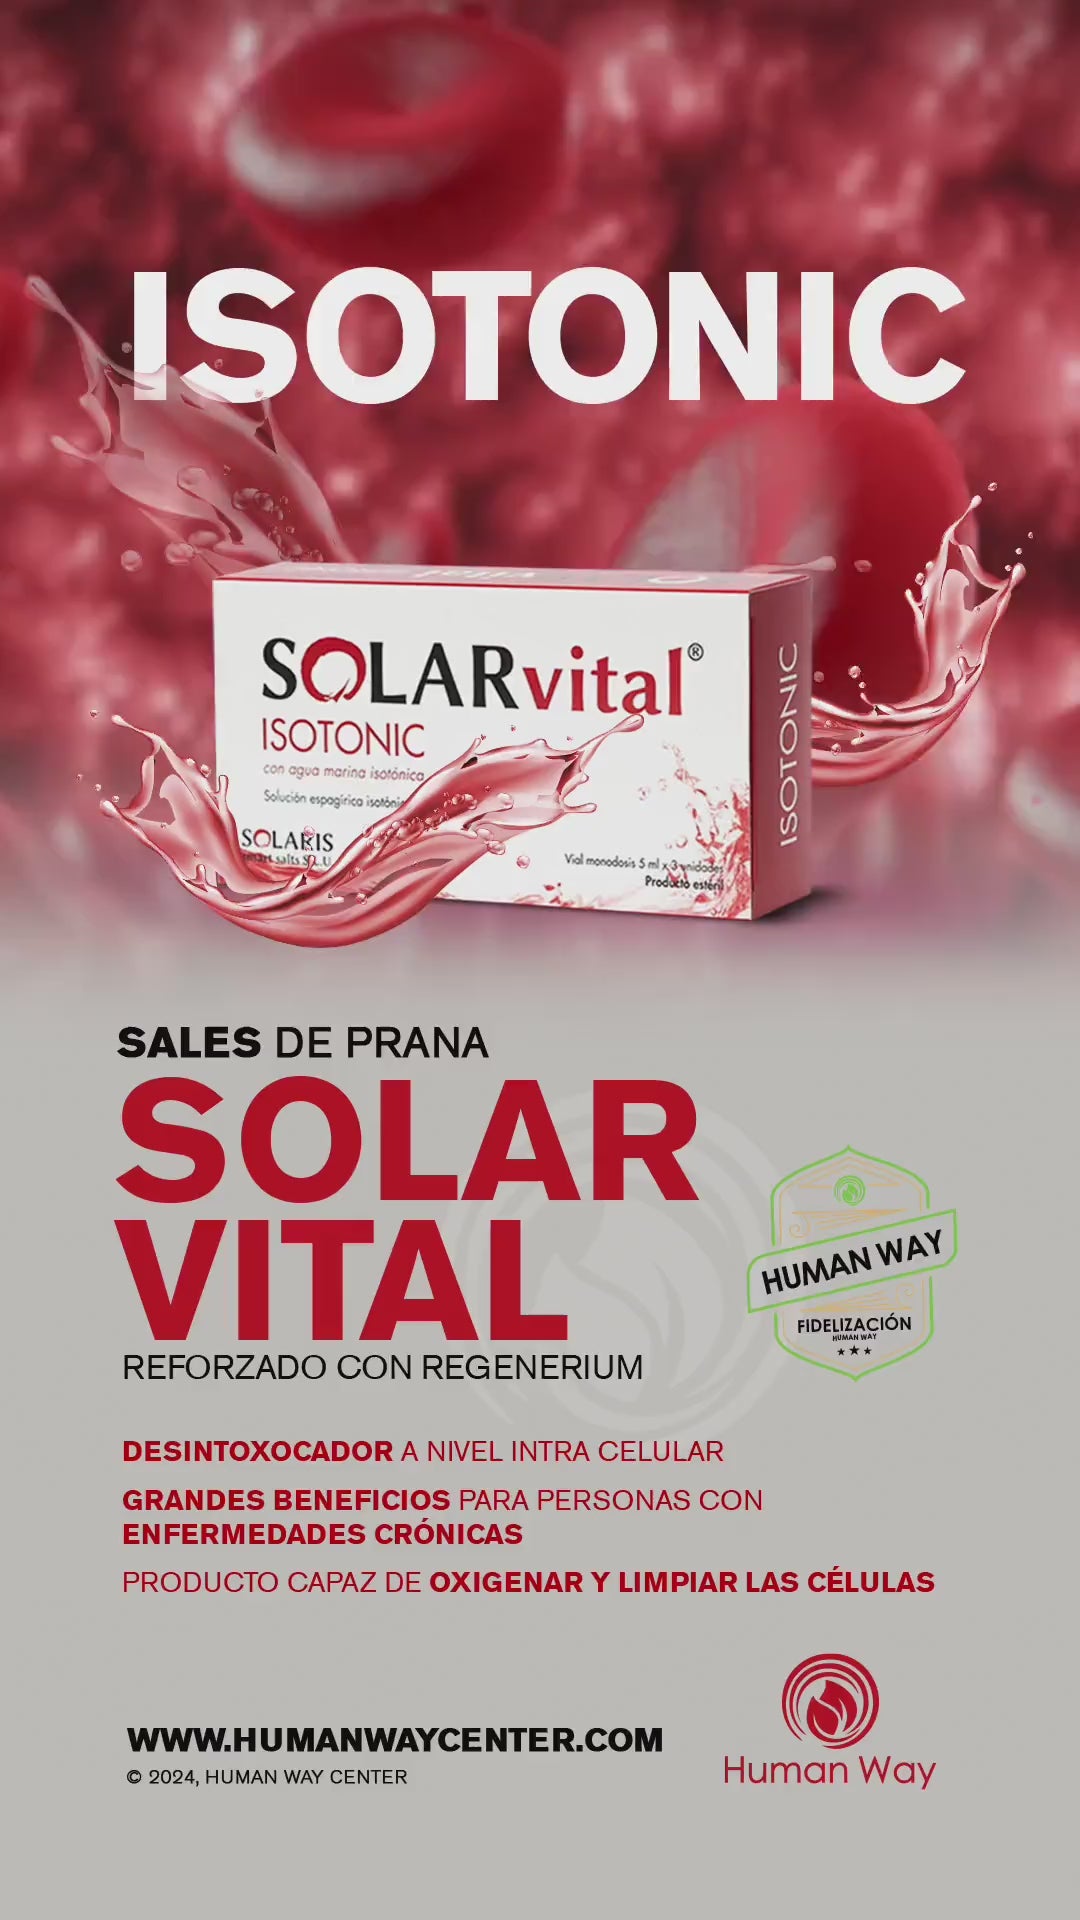 Solar Vital Isotonic